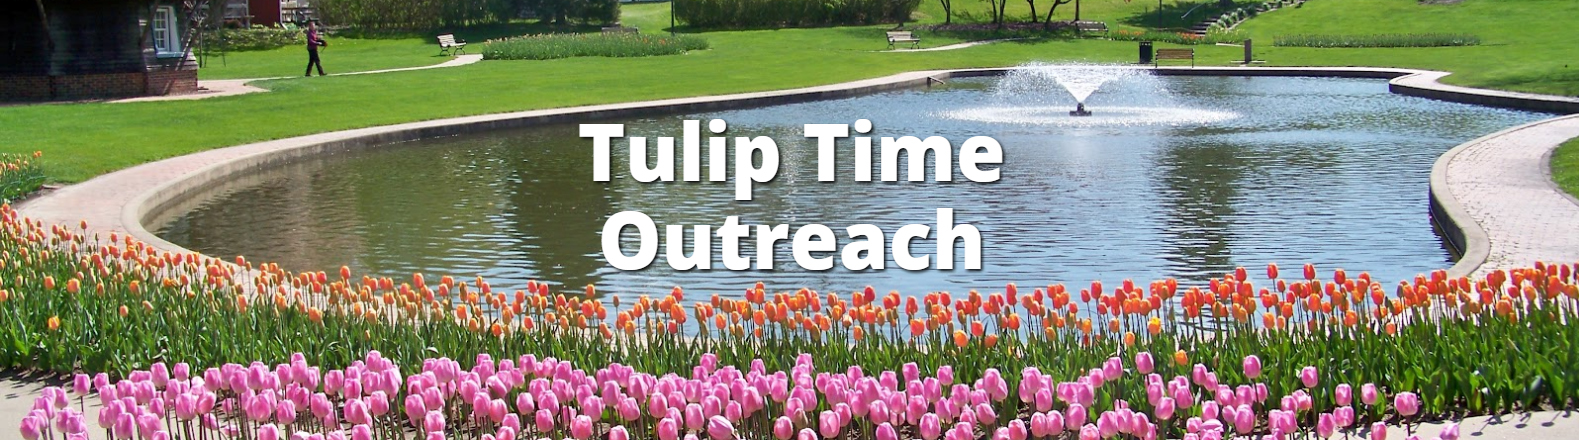 tulip time outreach